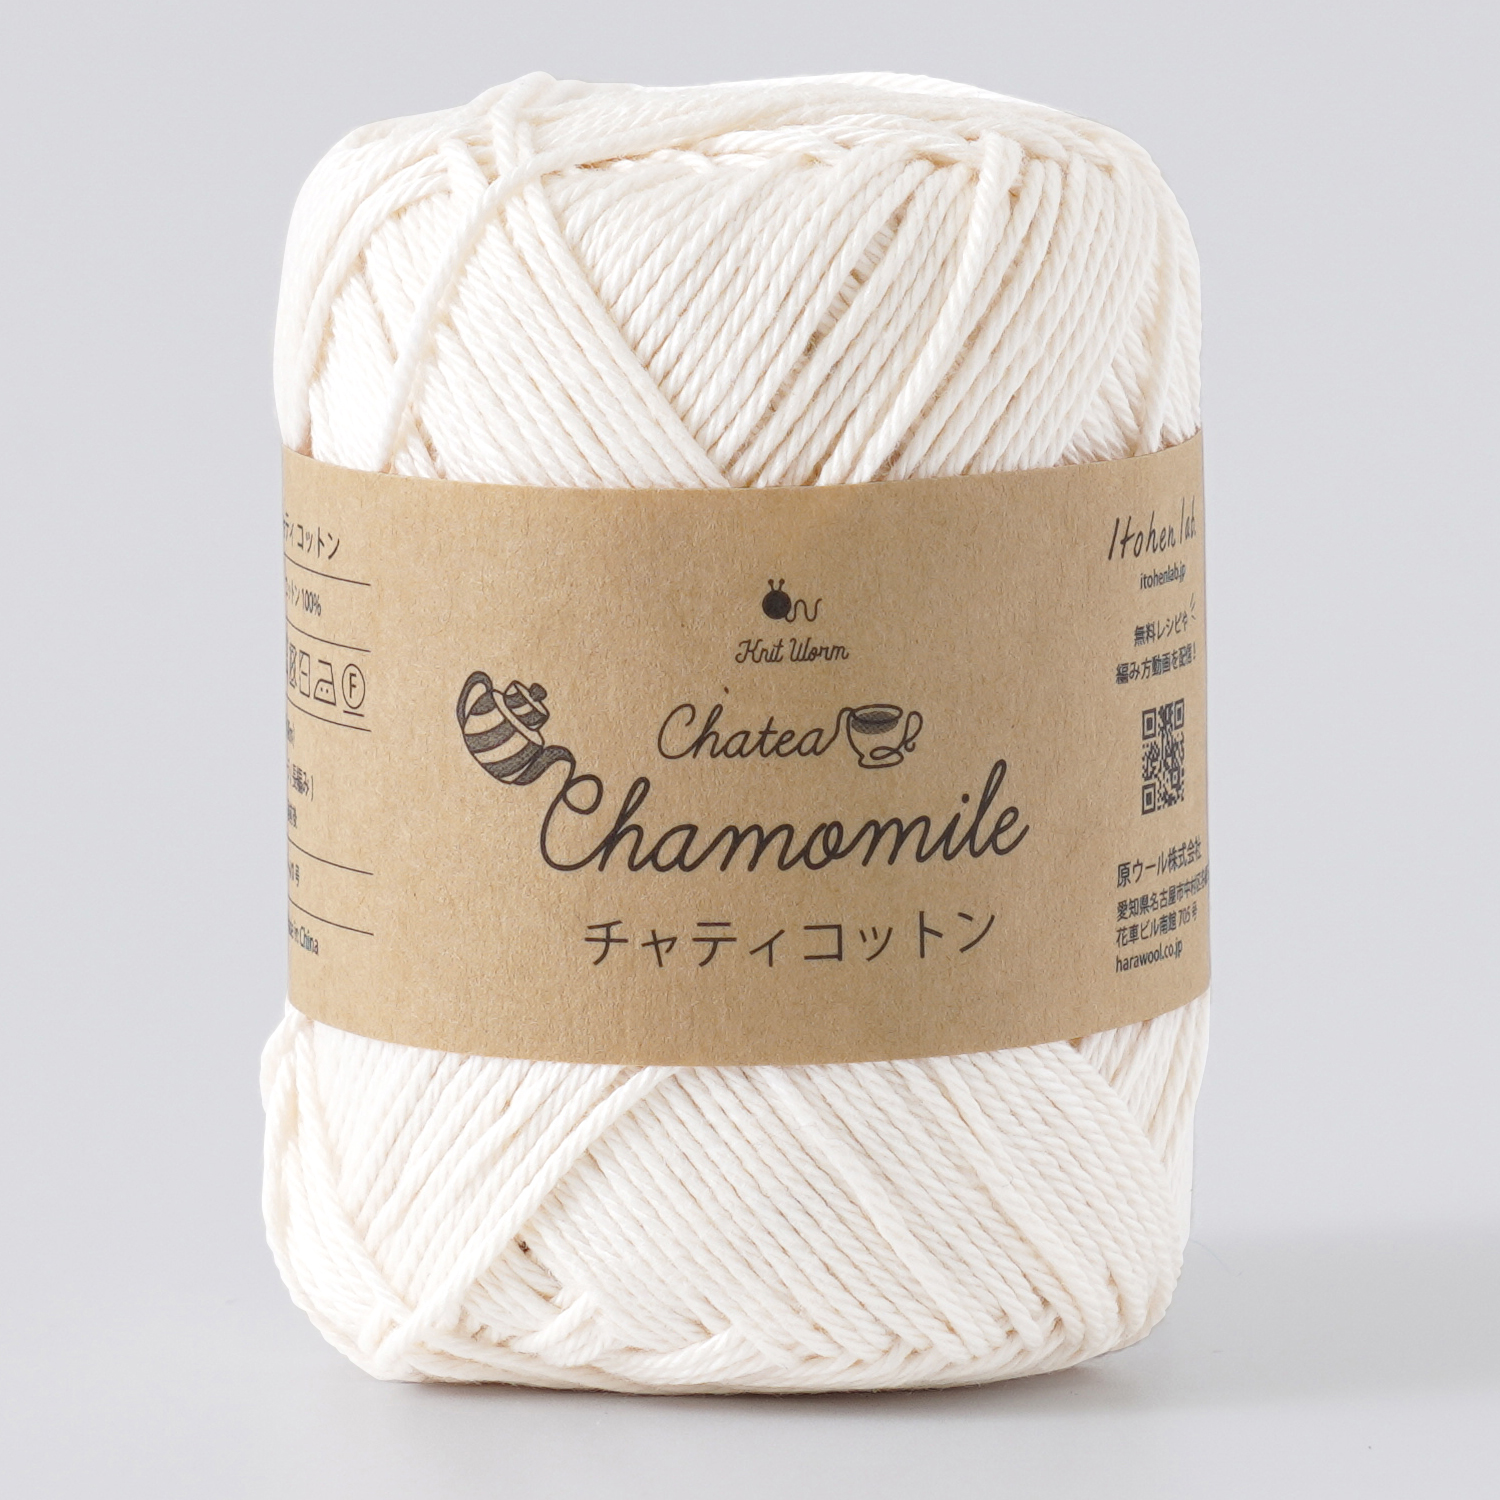 Knitworm 毛糸 1玉 チャティコットン 中細 20g(約48m) コットン100% 手編み糸と生地 イトヘンラボ